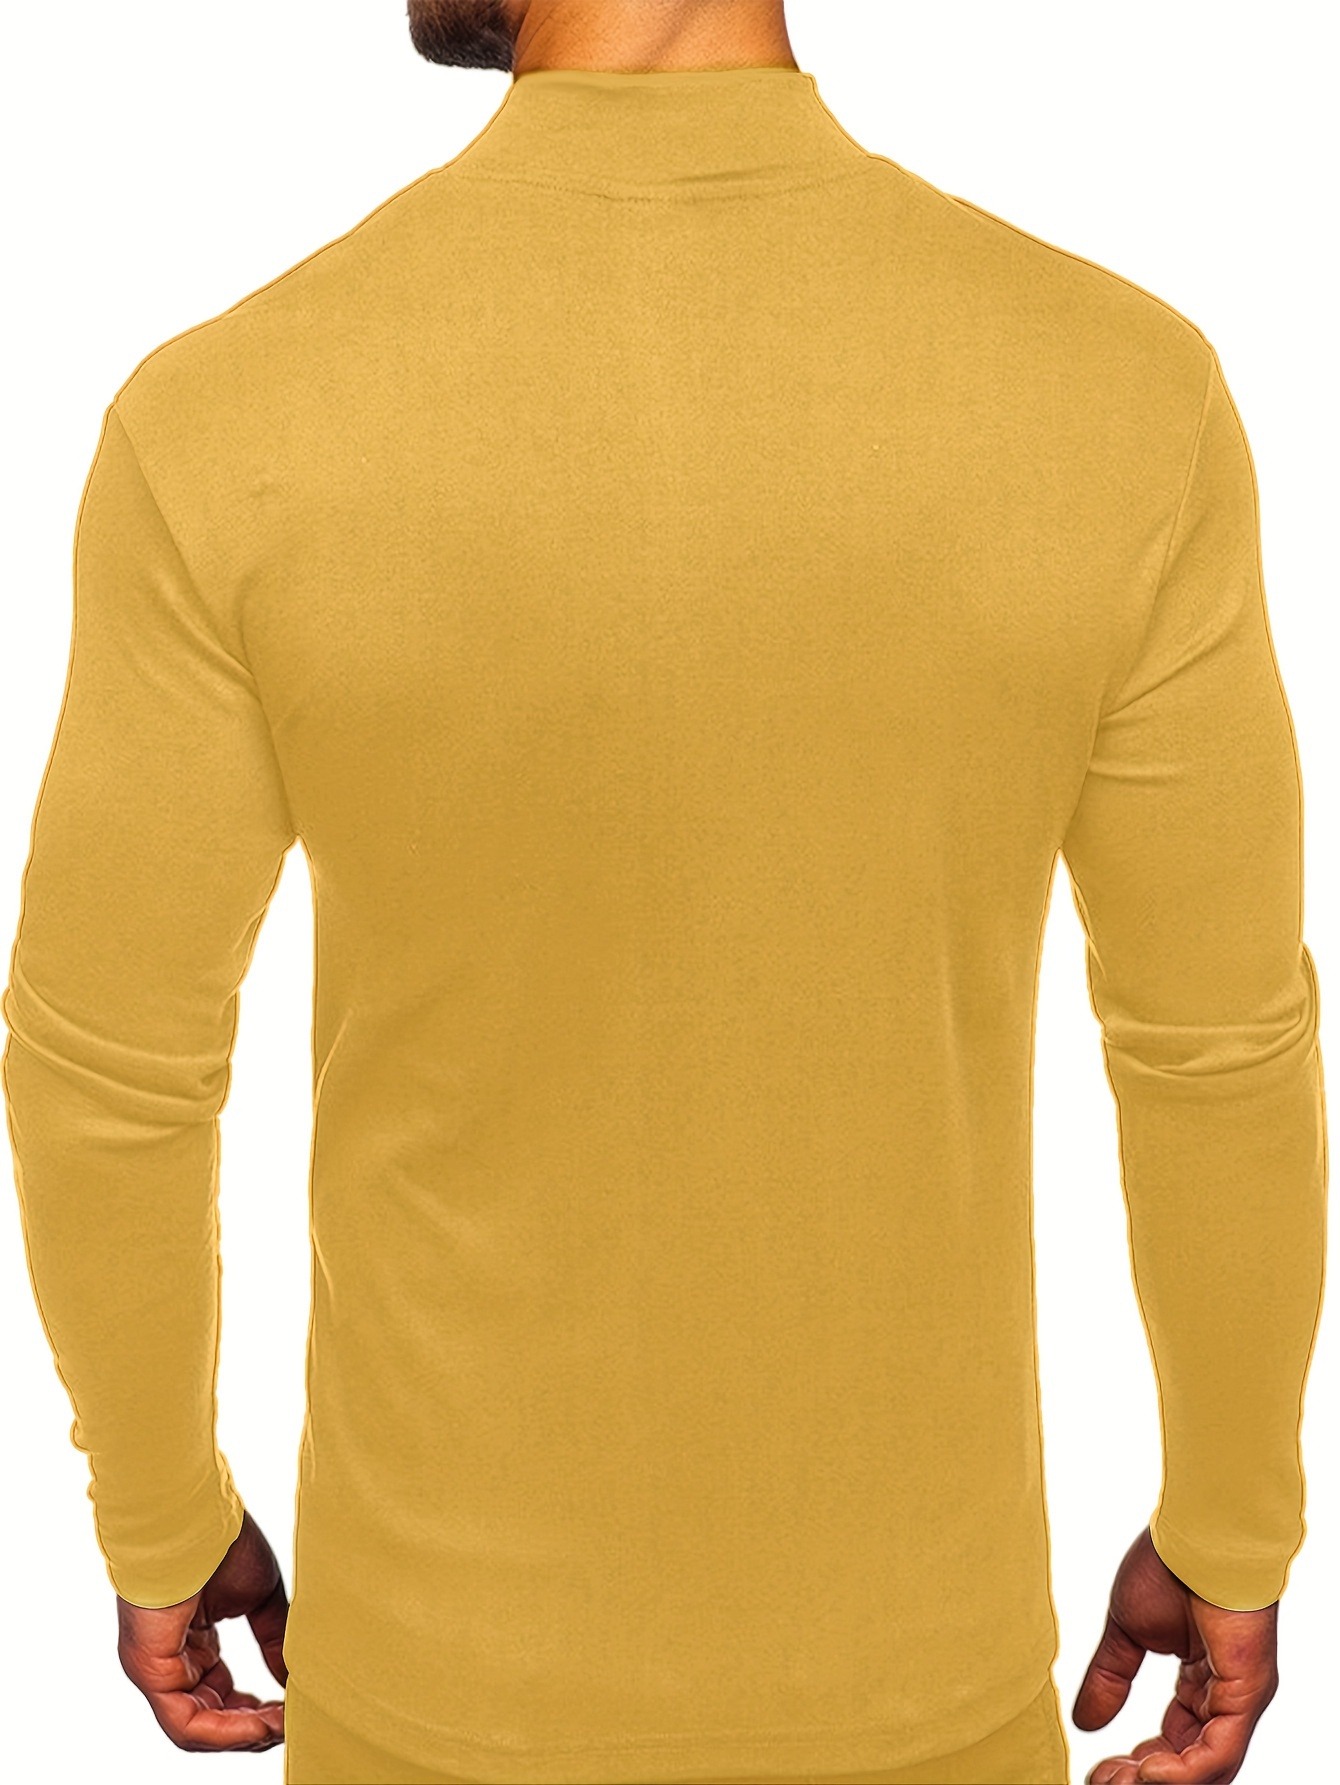 Camisetas manga larga amarillos de hombre